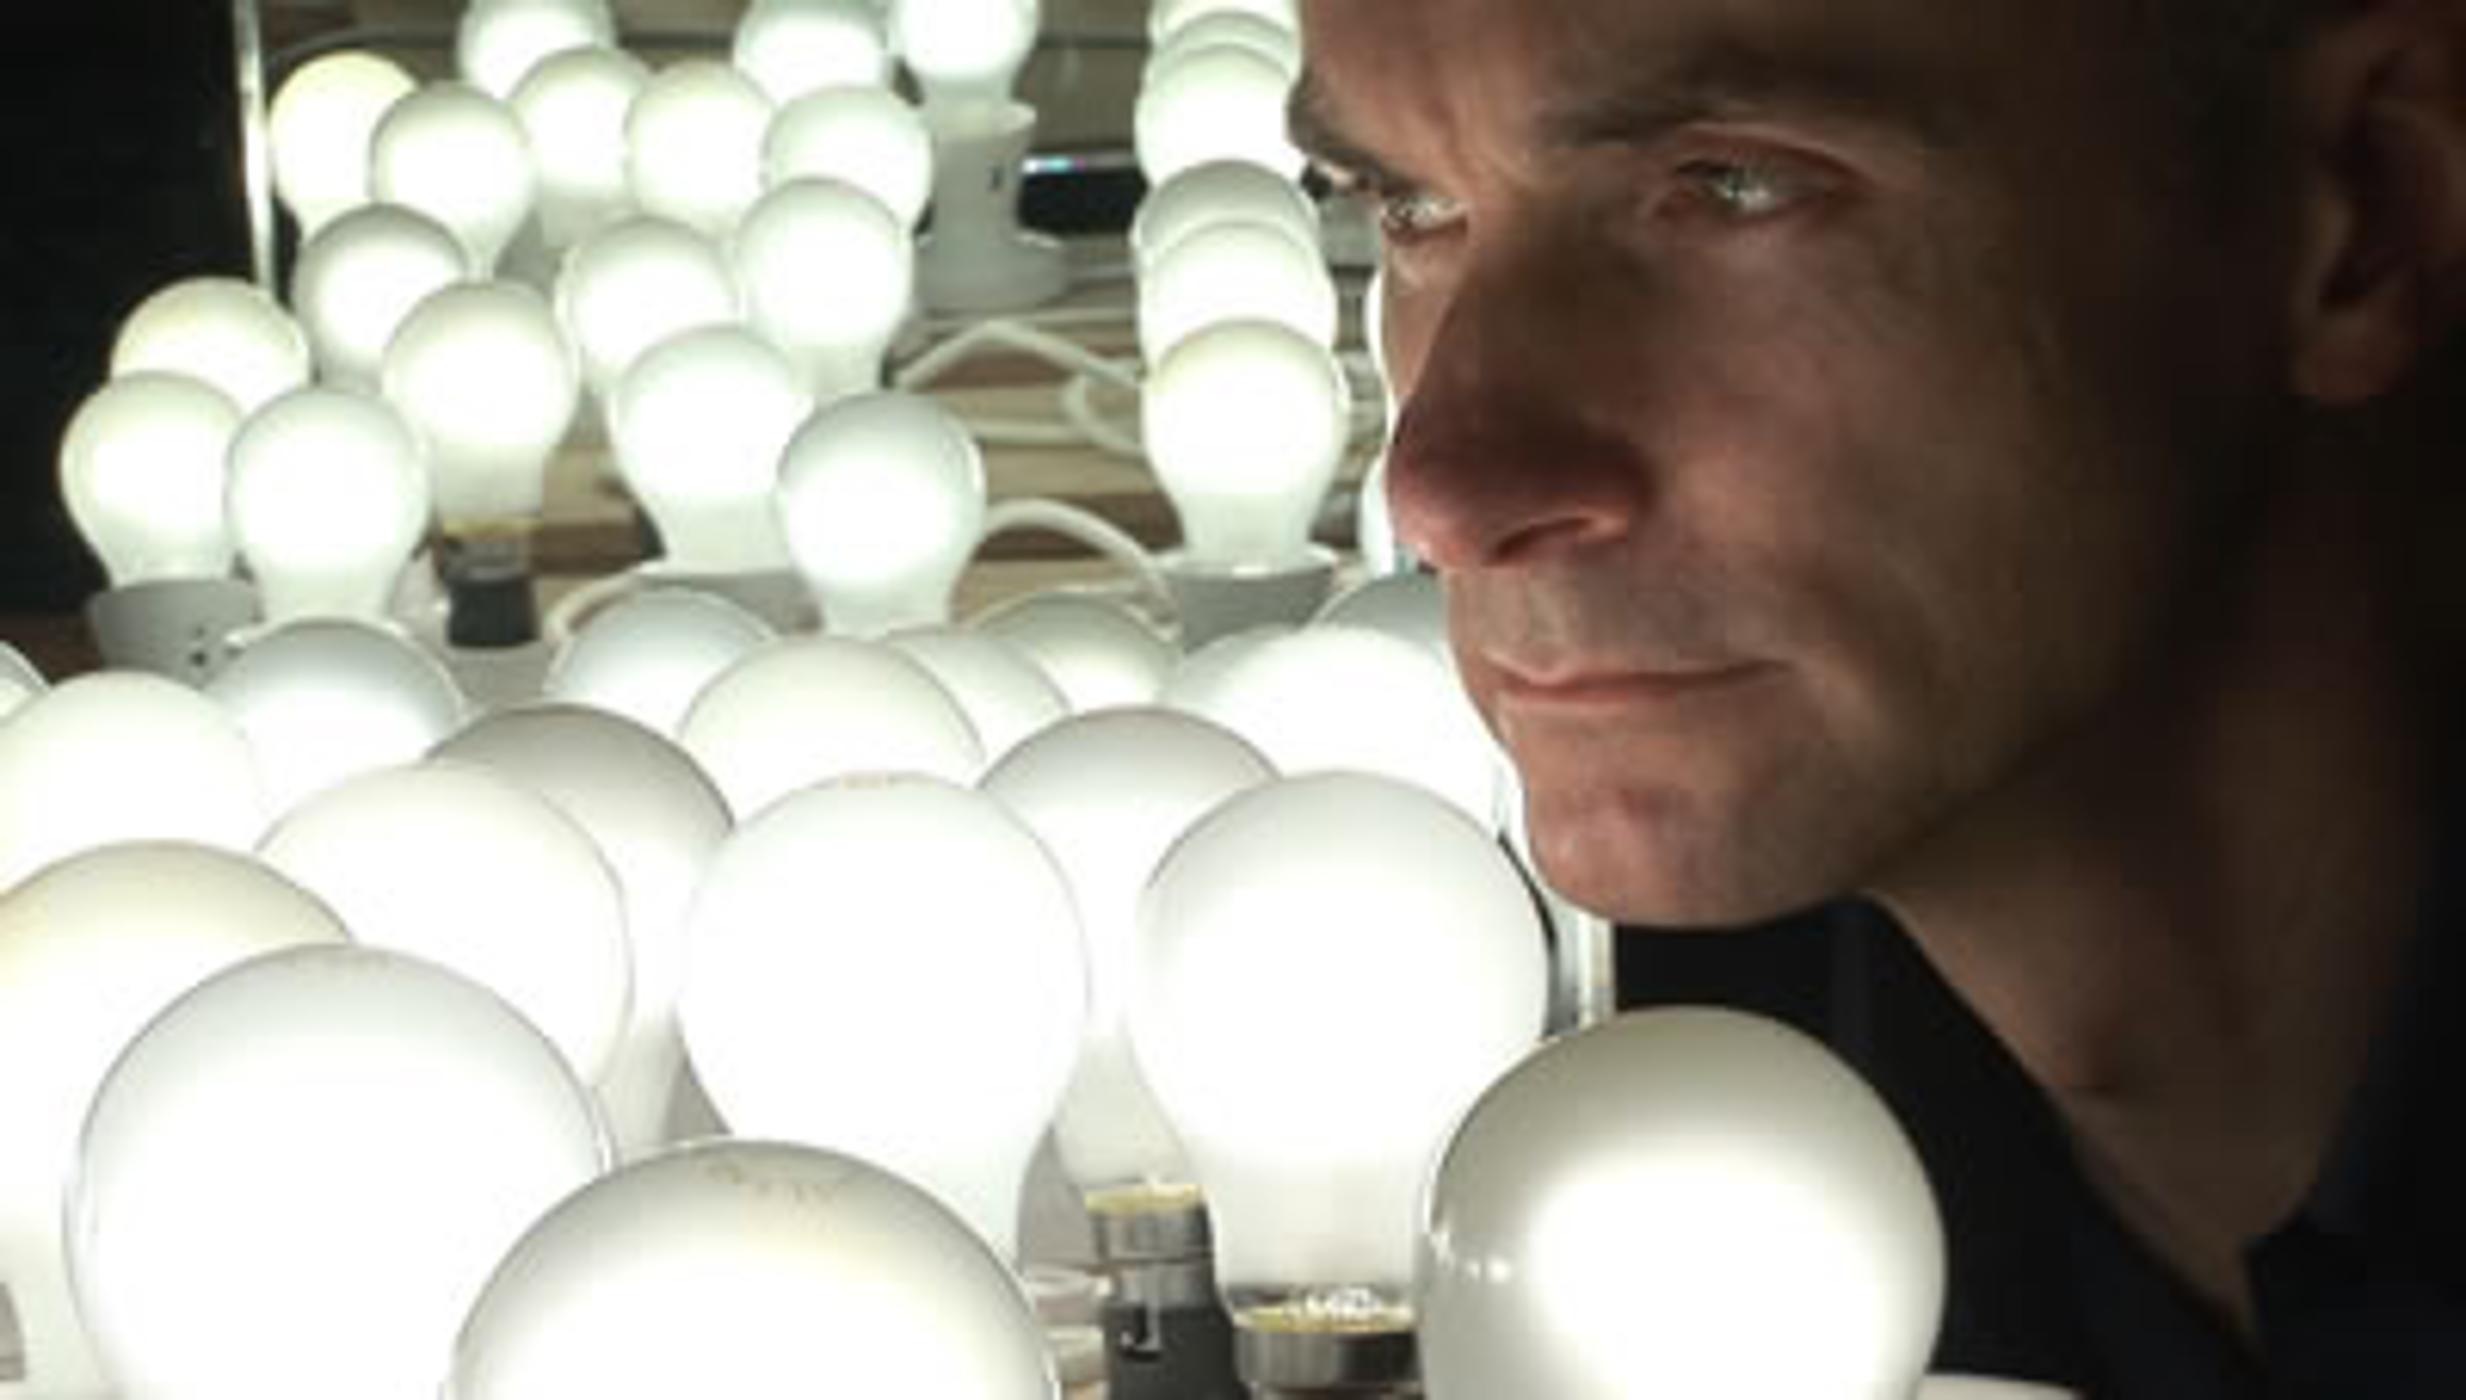 Cambridge Ideas - How Many Lightbulbs?